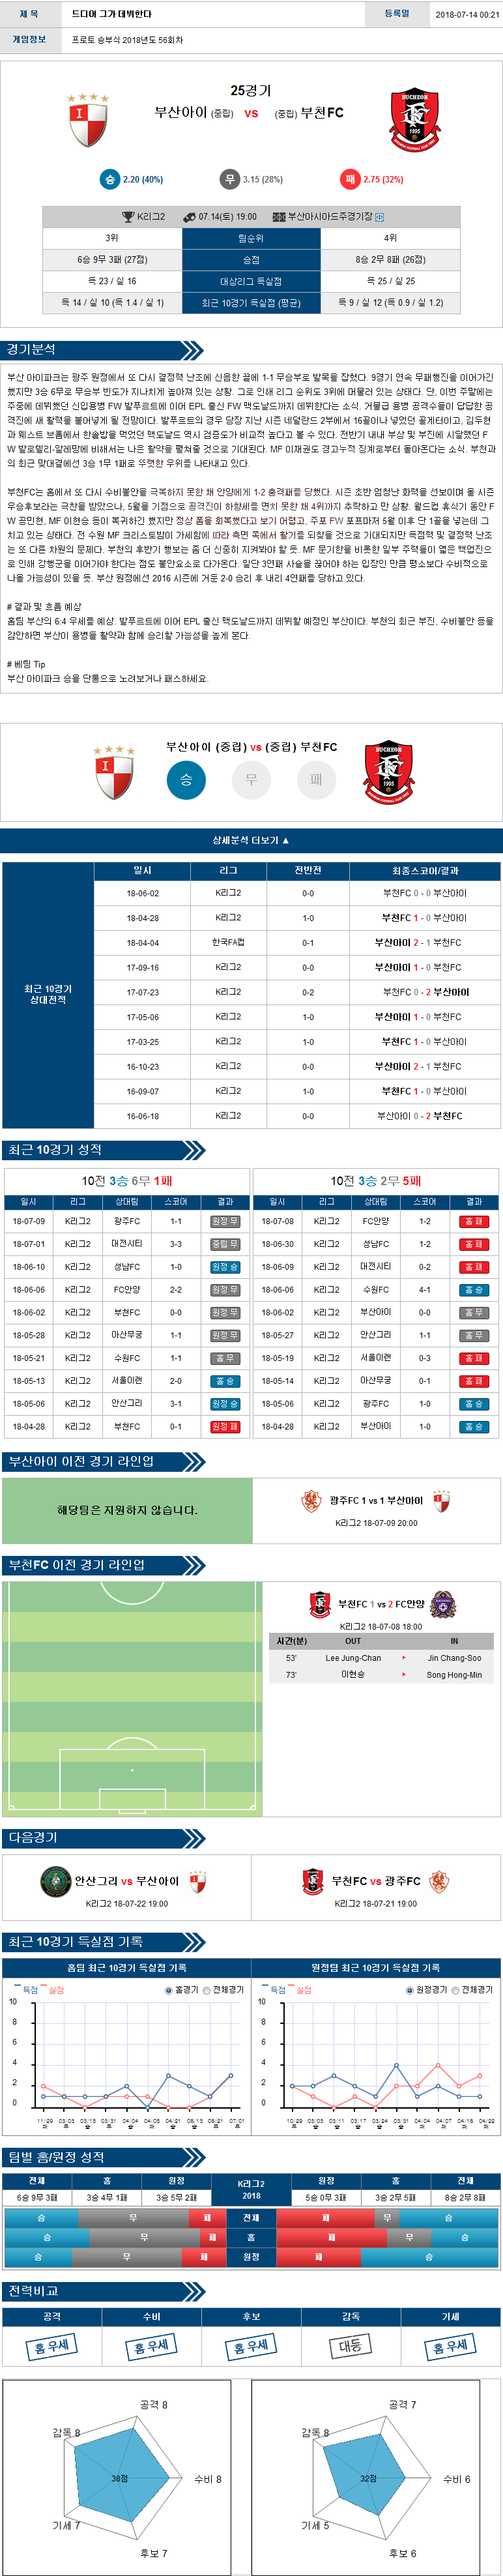 07-14 [K2리그] 19:00 축구분석 부산아이 vs 부천FC